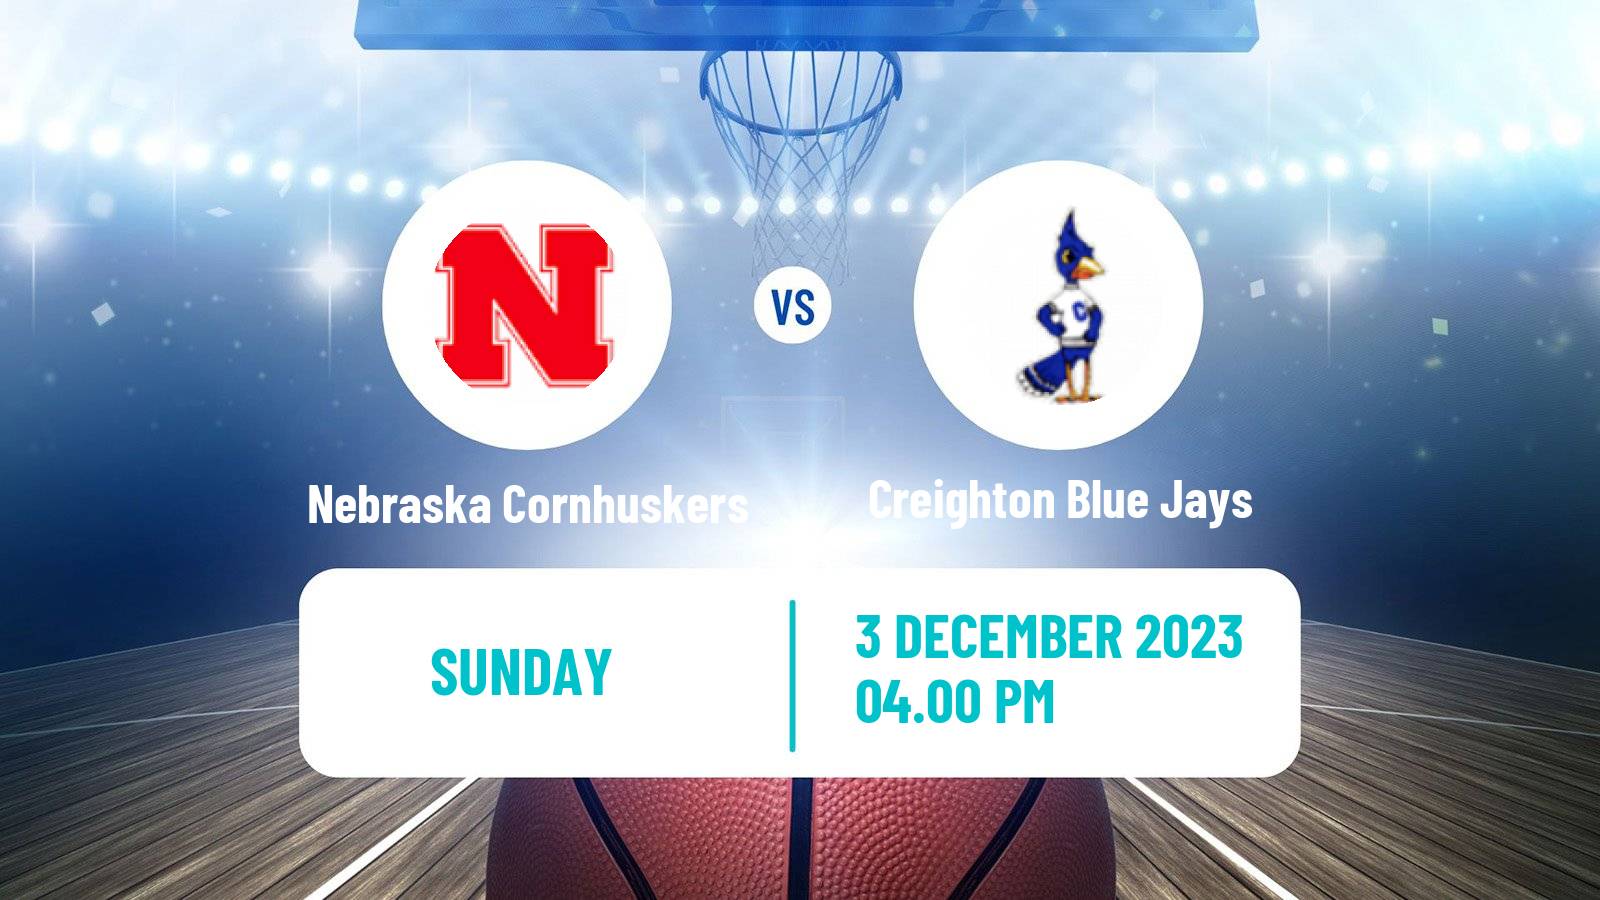 Basketball NCAA College Basketball Nebraska Cornhuskers - Creighton Blue Jays